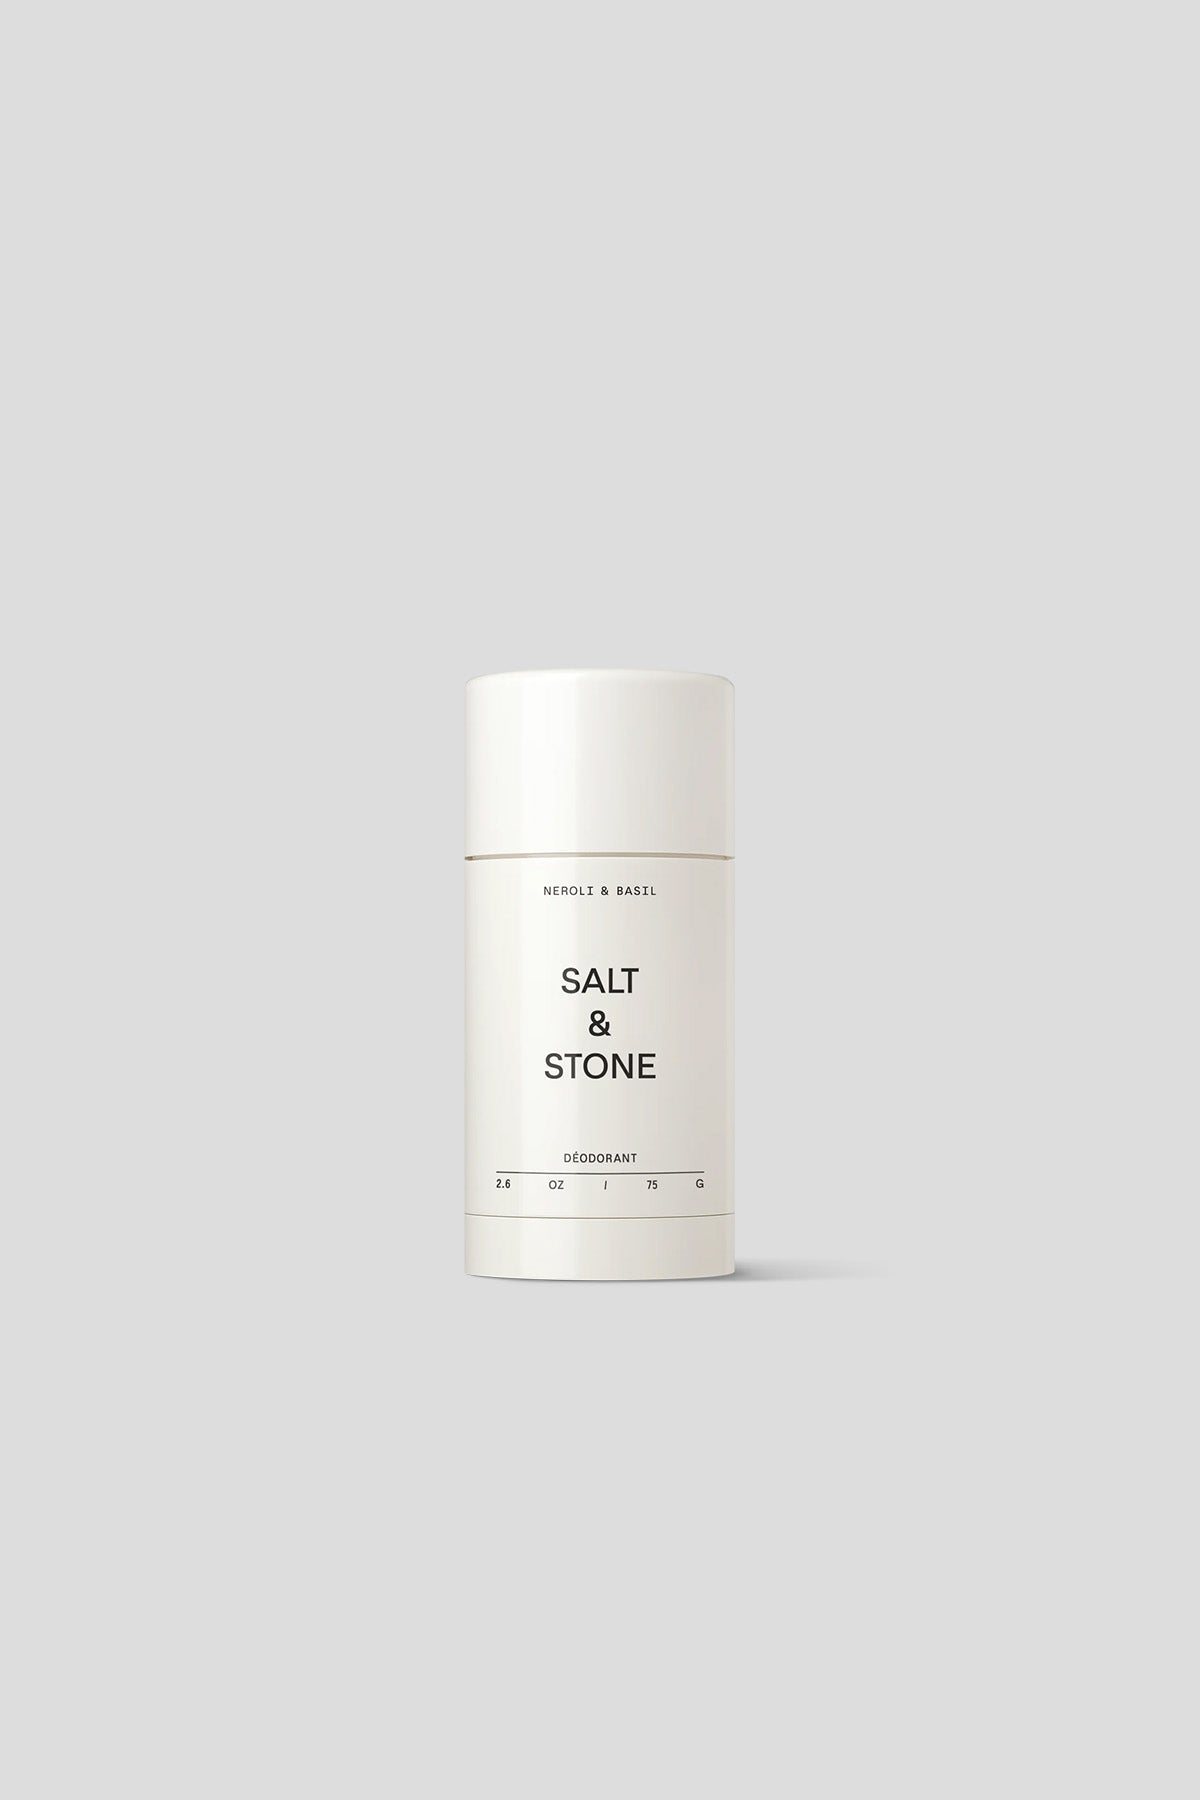 salt & stone - NEROLI AND BASIL NATURAL DEODORANT - LE LABO STORE